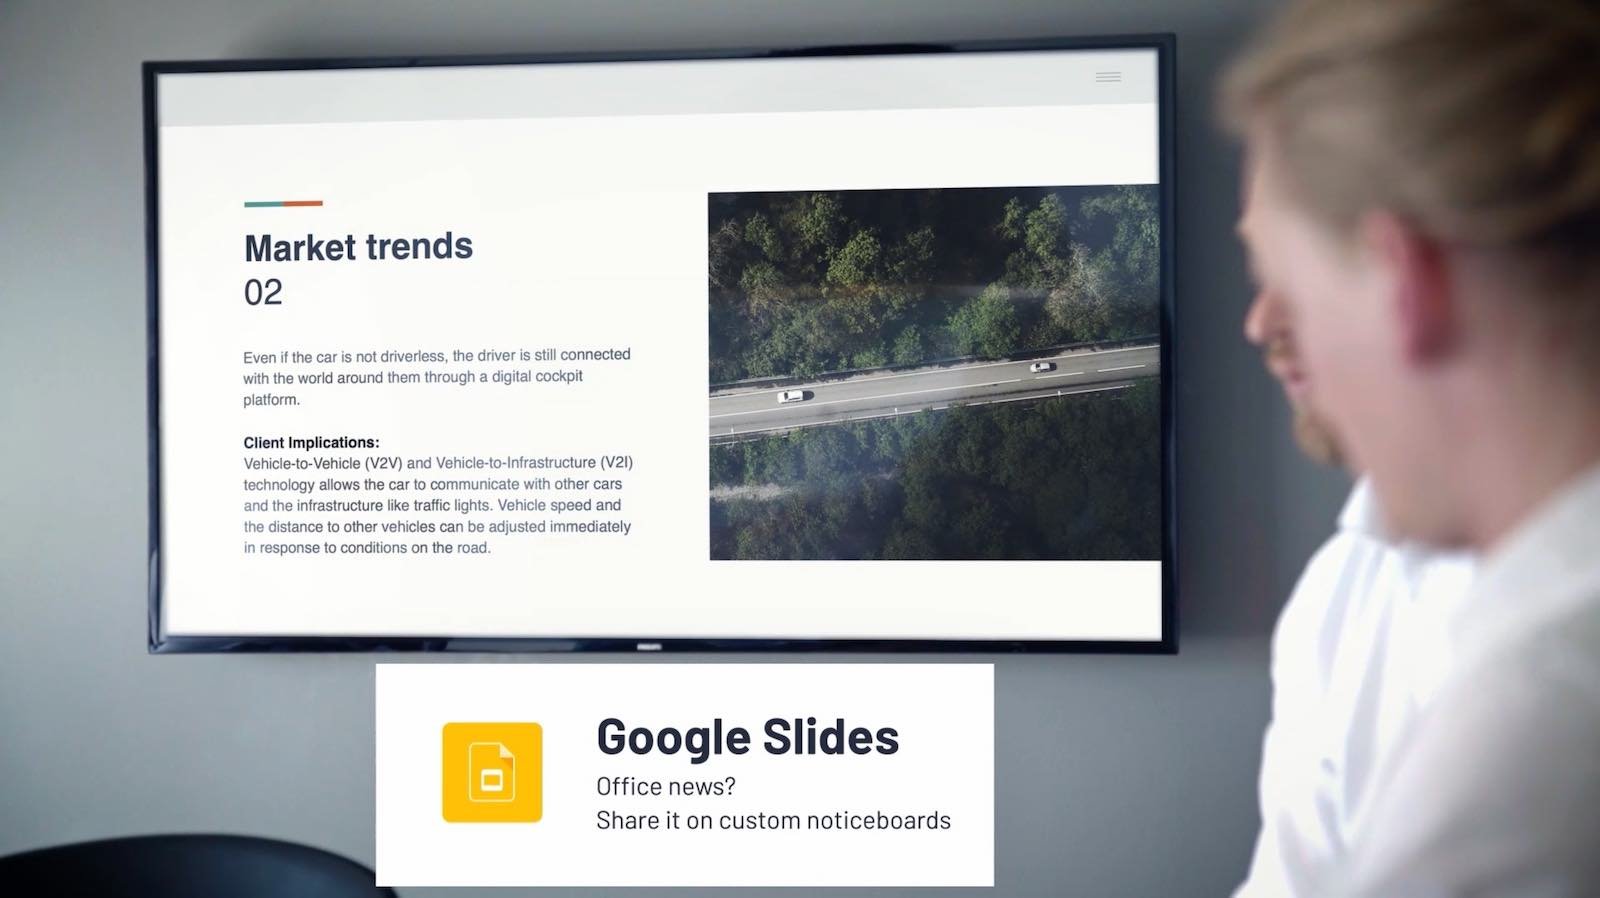 Google Slides on a TV's homescreen